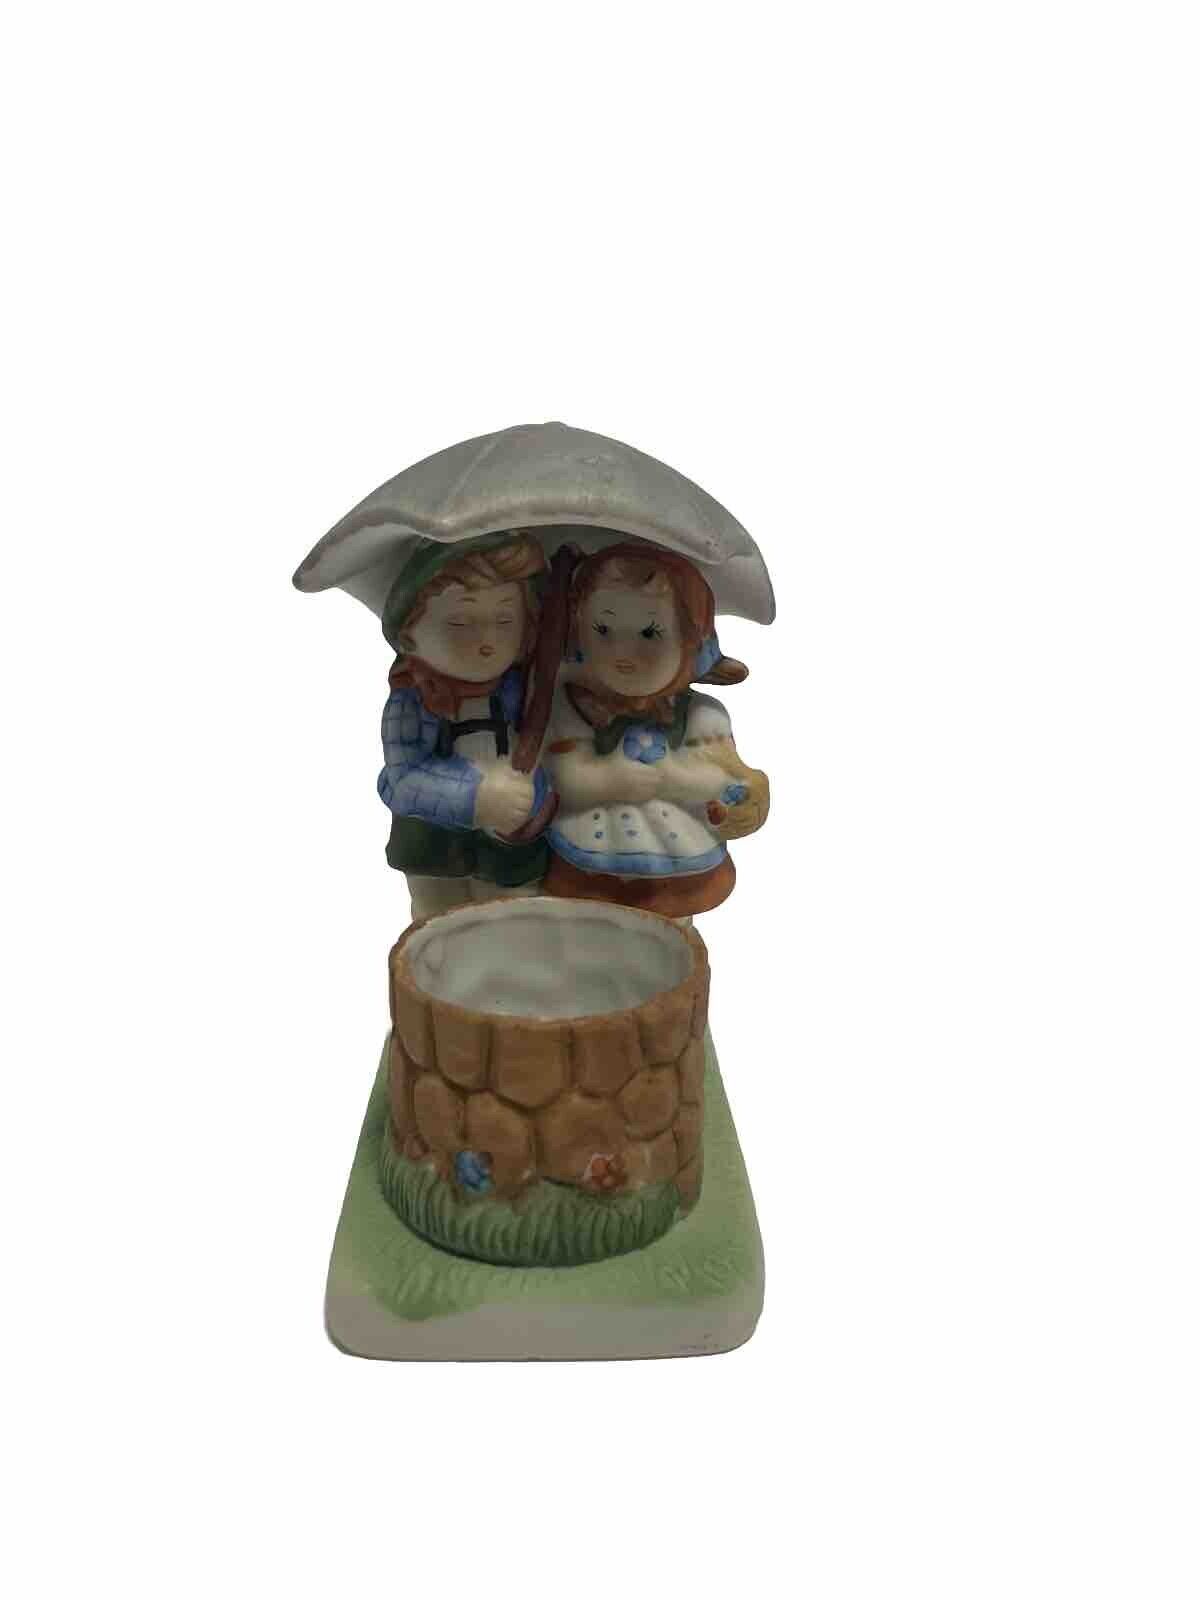 Vintage Figurine Boy and Girl Candle Holder Wishing Well Umbrella 1981 WA Taiwan